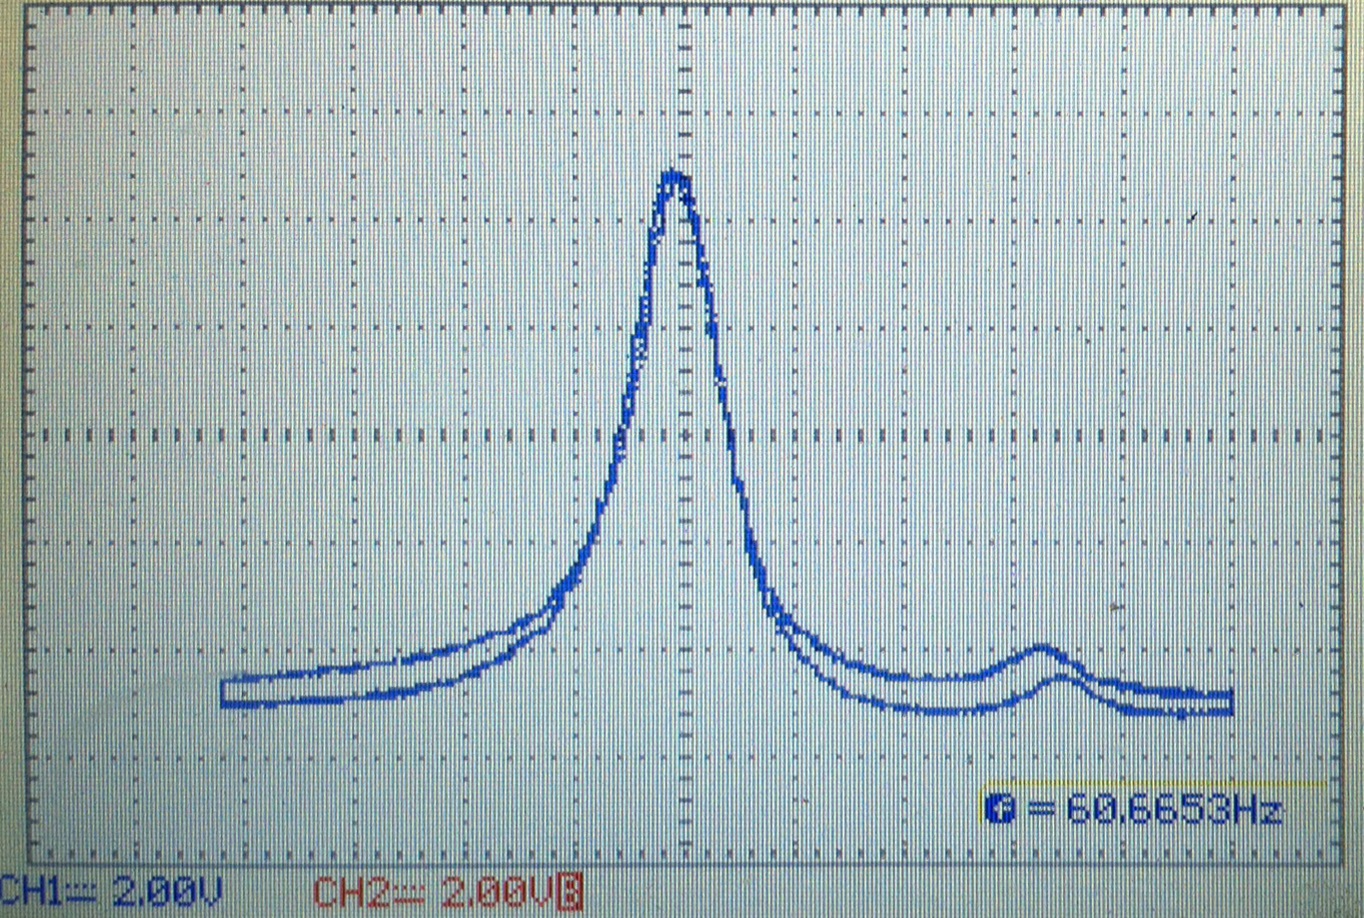 Magnetic resonance signal on oscilloscope (X-Y mode).jpg